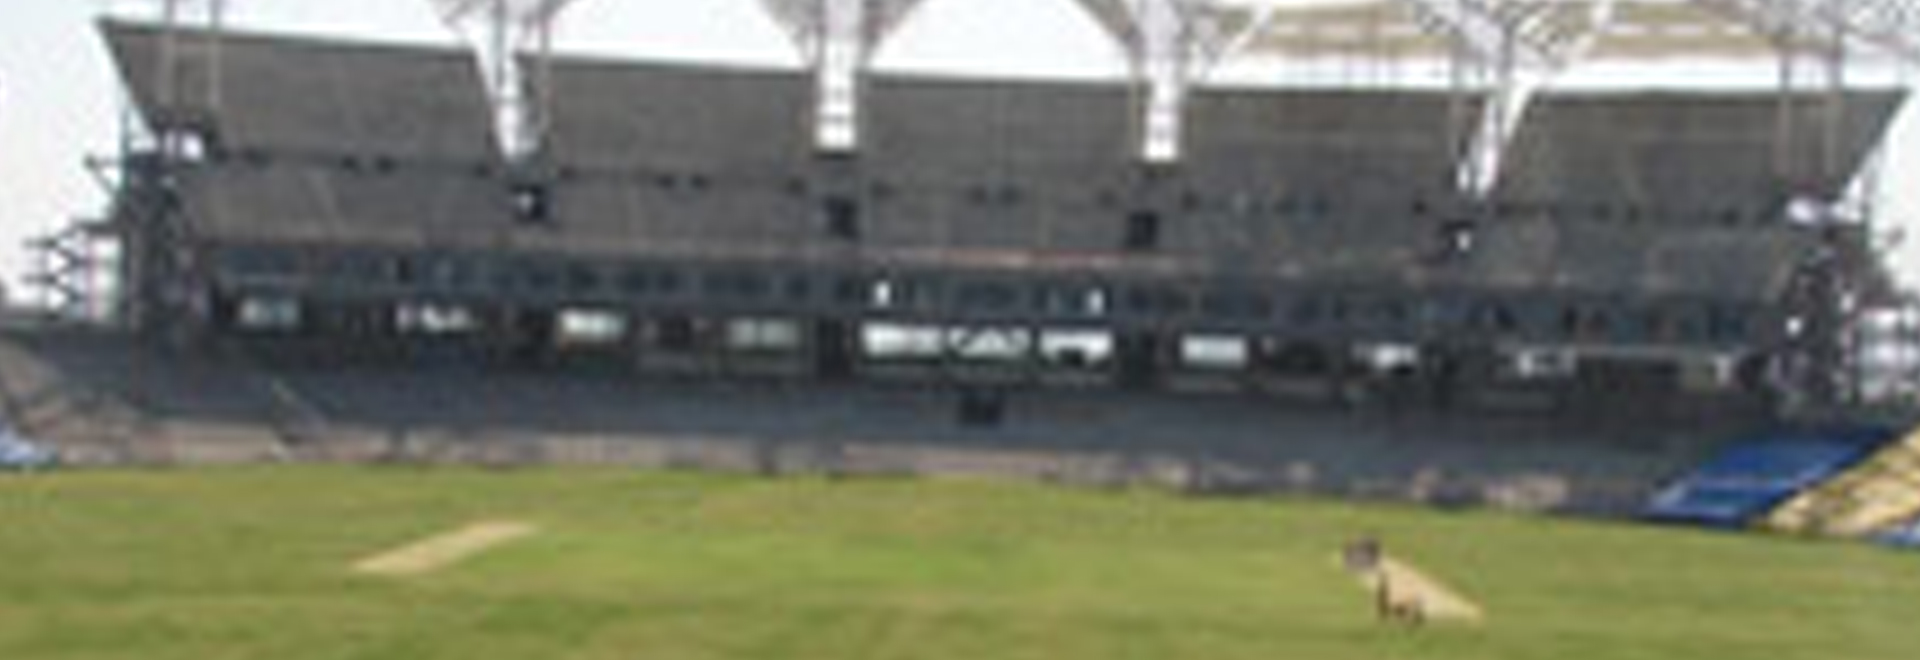 45000 Seater Cricket Stadium In Pune – Maharashtra Cricket Association